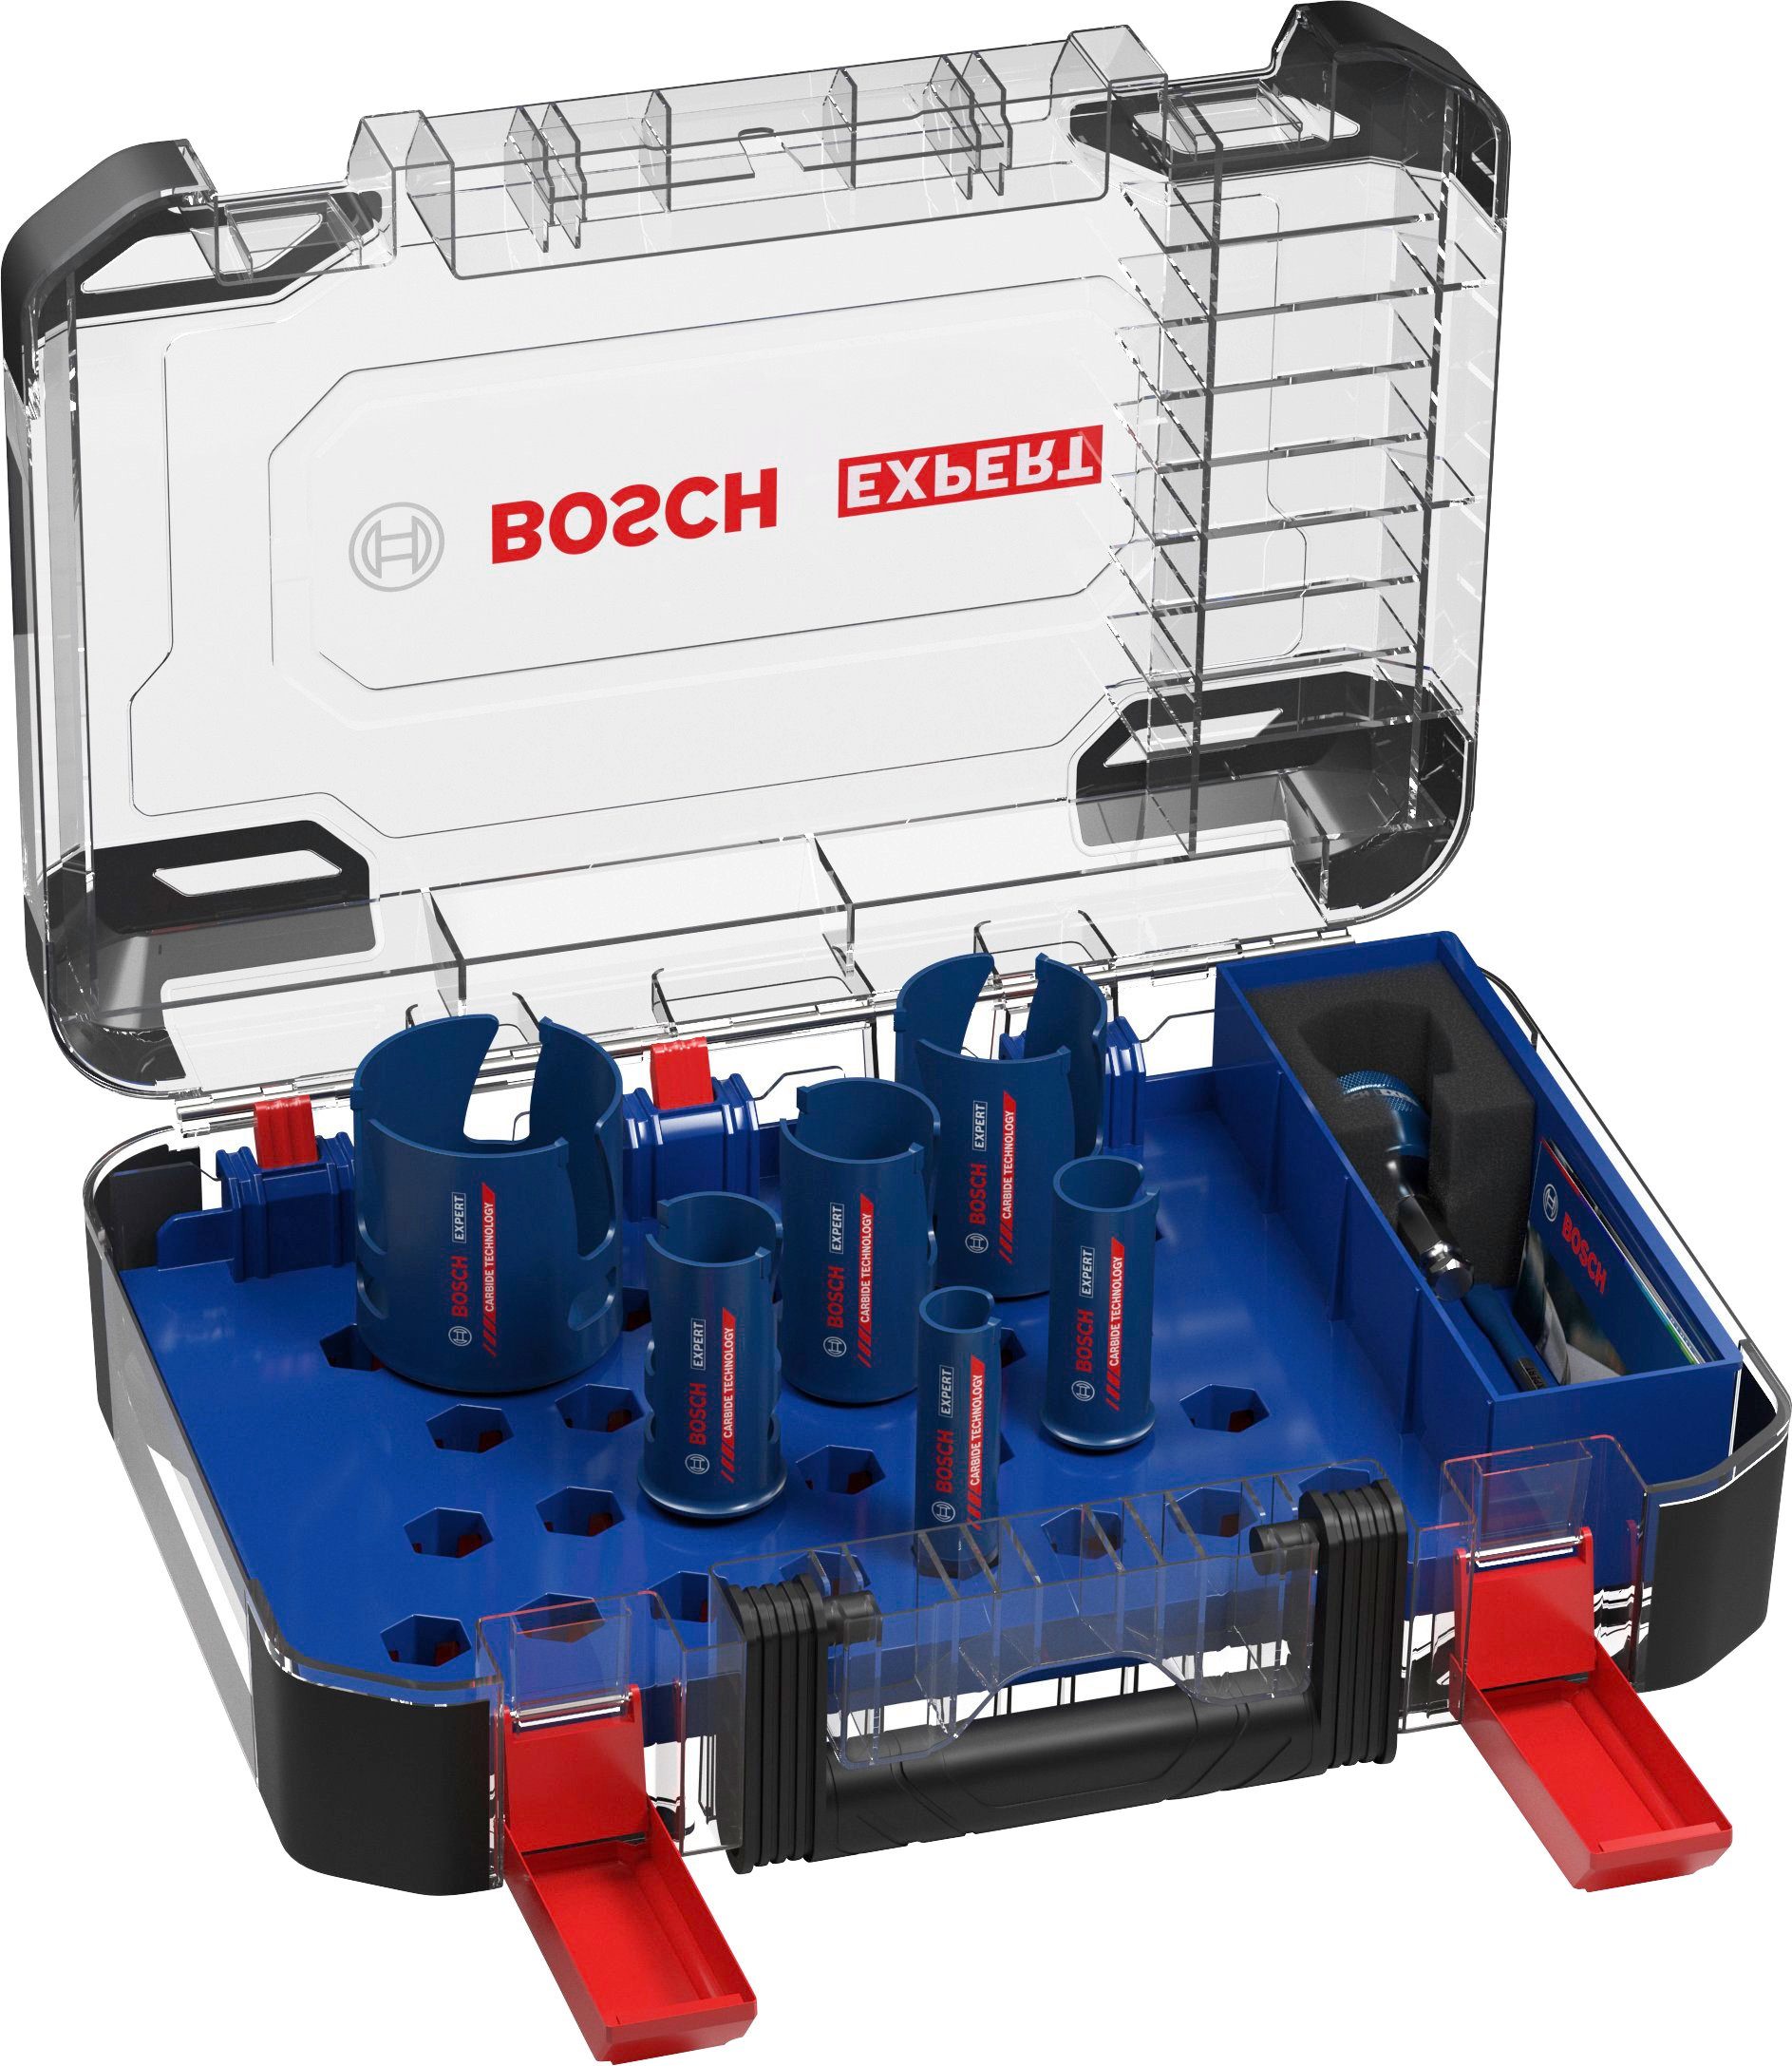 mm Construction Lochsäge 10-tlg., EXPERT Material, Professional Bosch 20/25/32/38/51/64 Set,